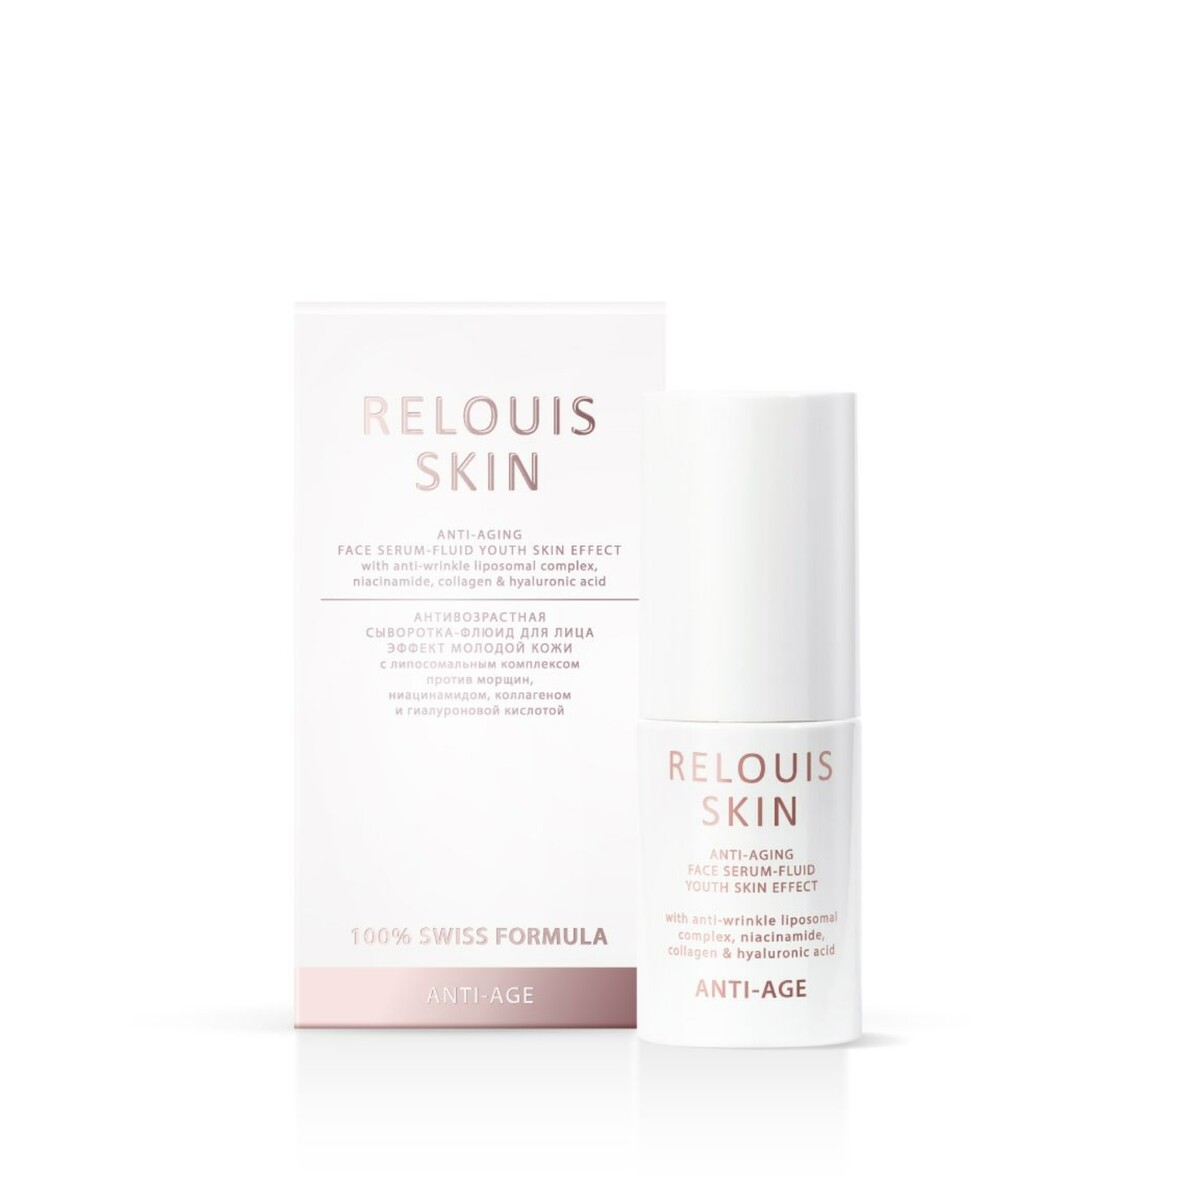 Relouis skin anti-age -    30